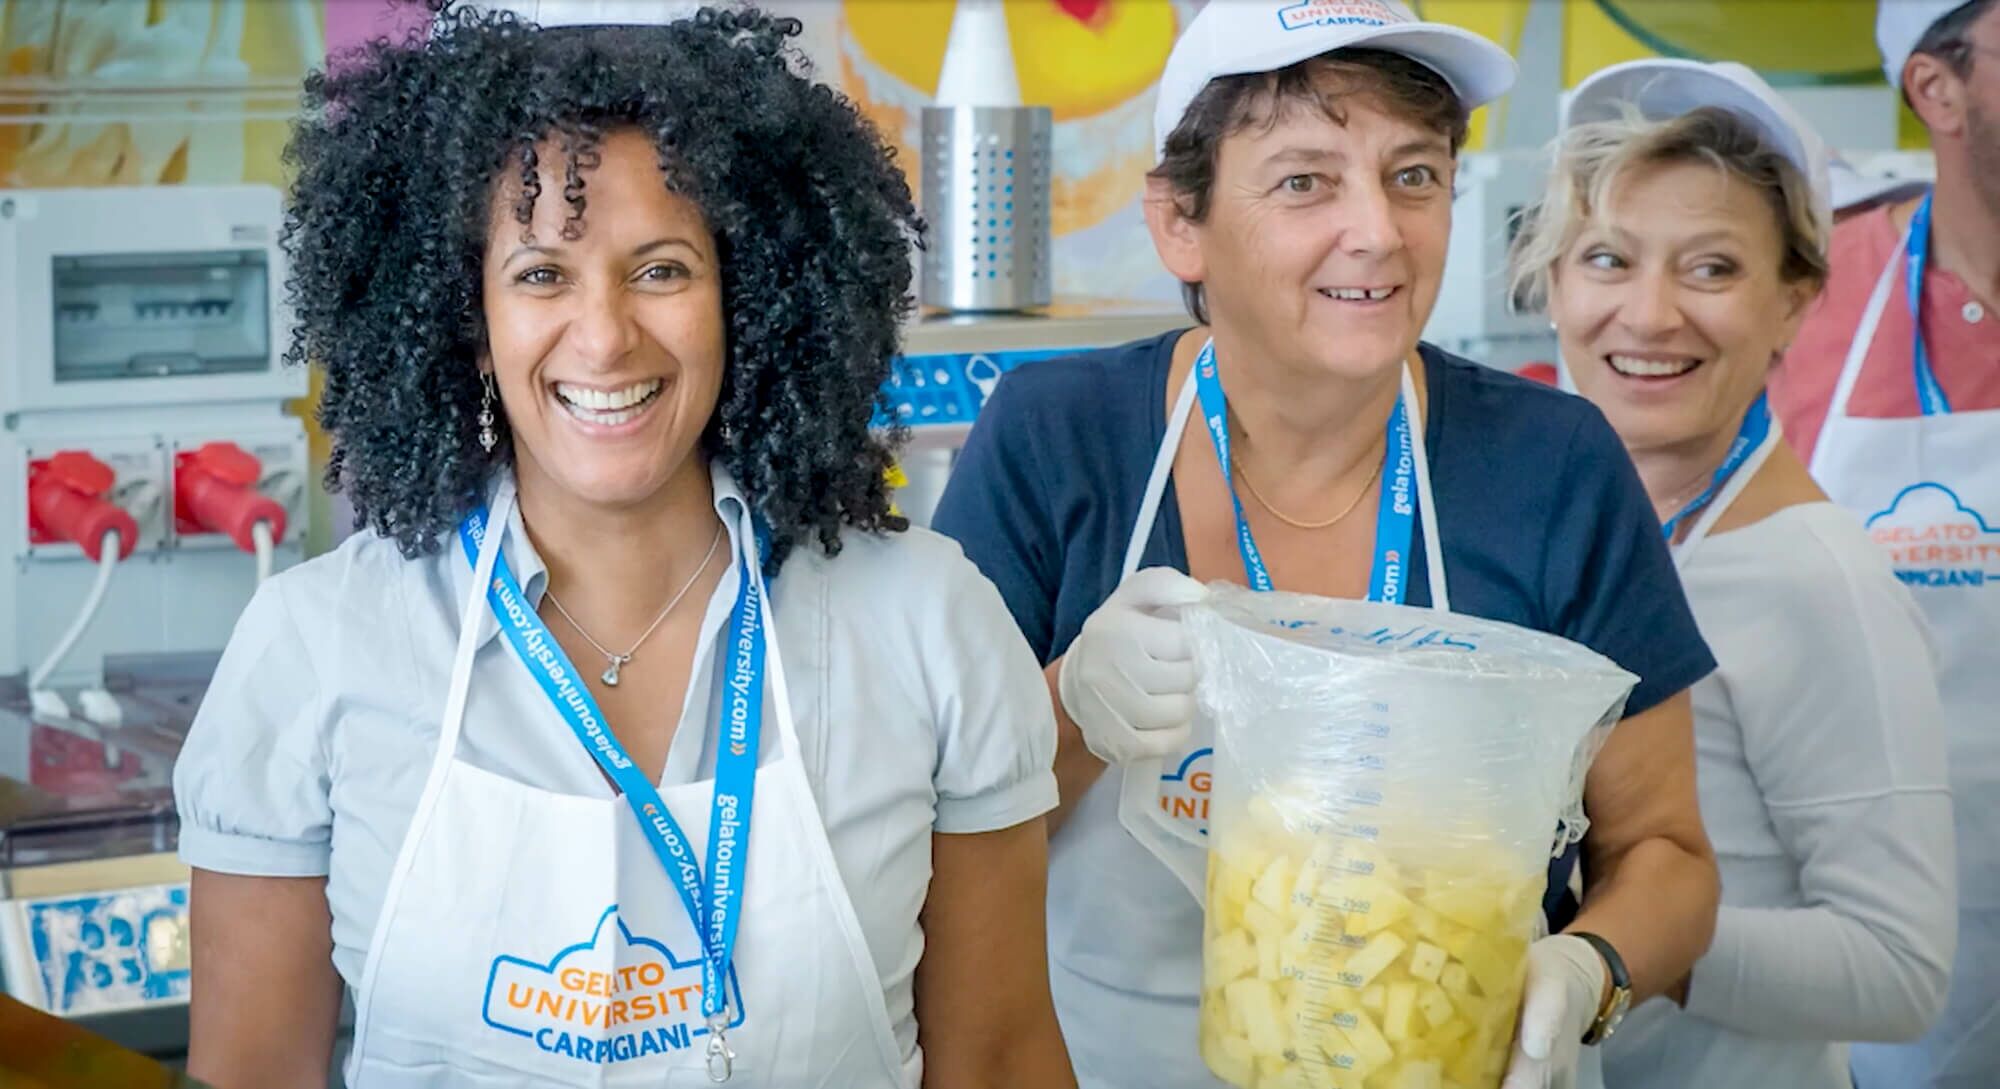 Impiegati sorridenti con pezzi di ananas - Carpigiani Gelato University - Krä Eistechnik